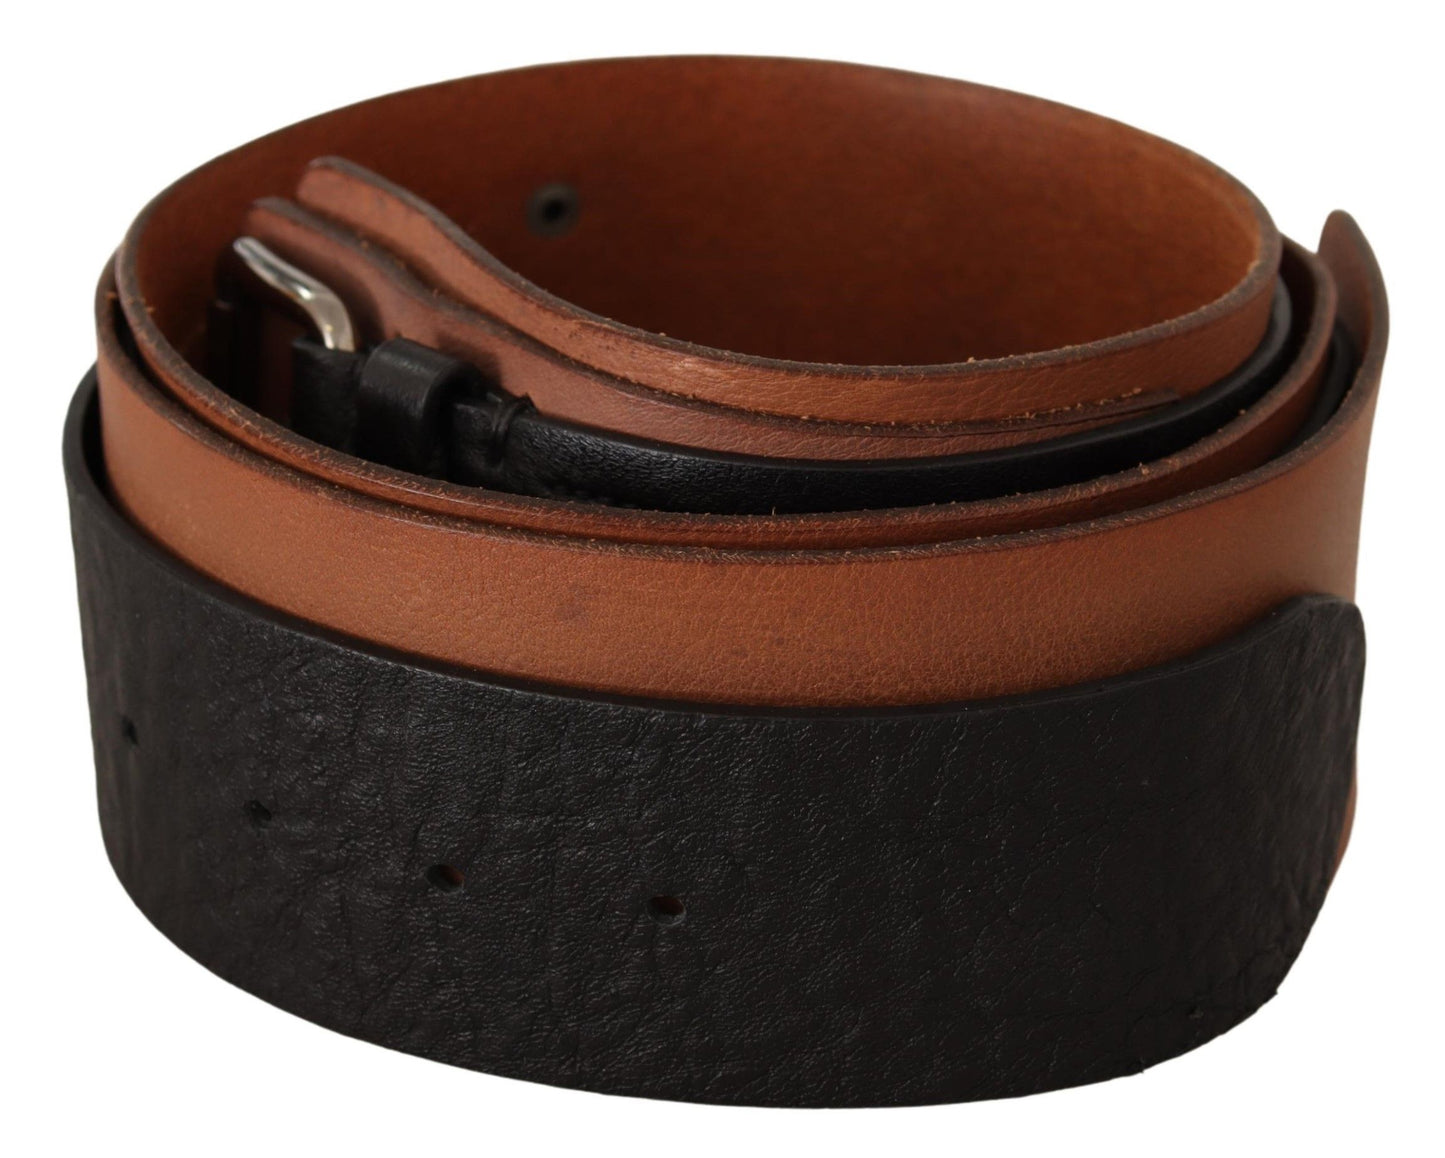 Elegant Dual-Tone Leather Fashion Belt